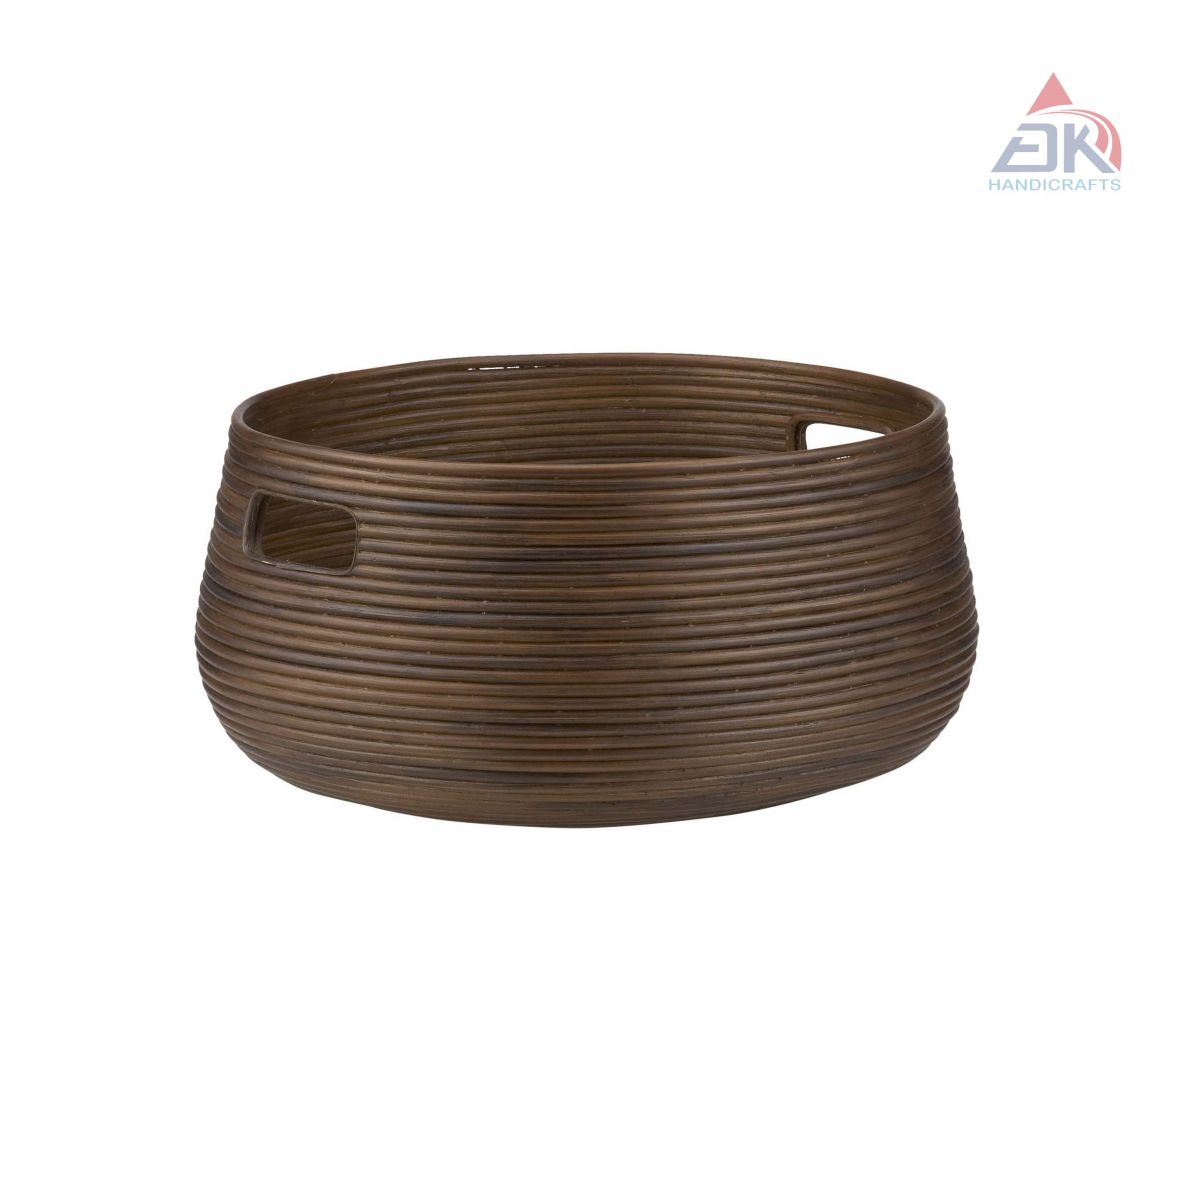 Coiled Oval Basket # DK35